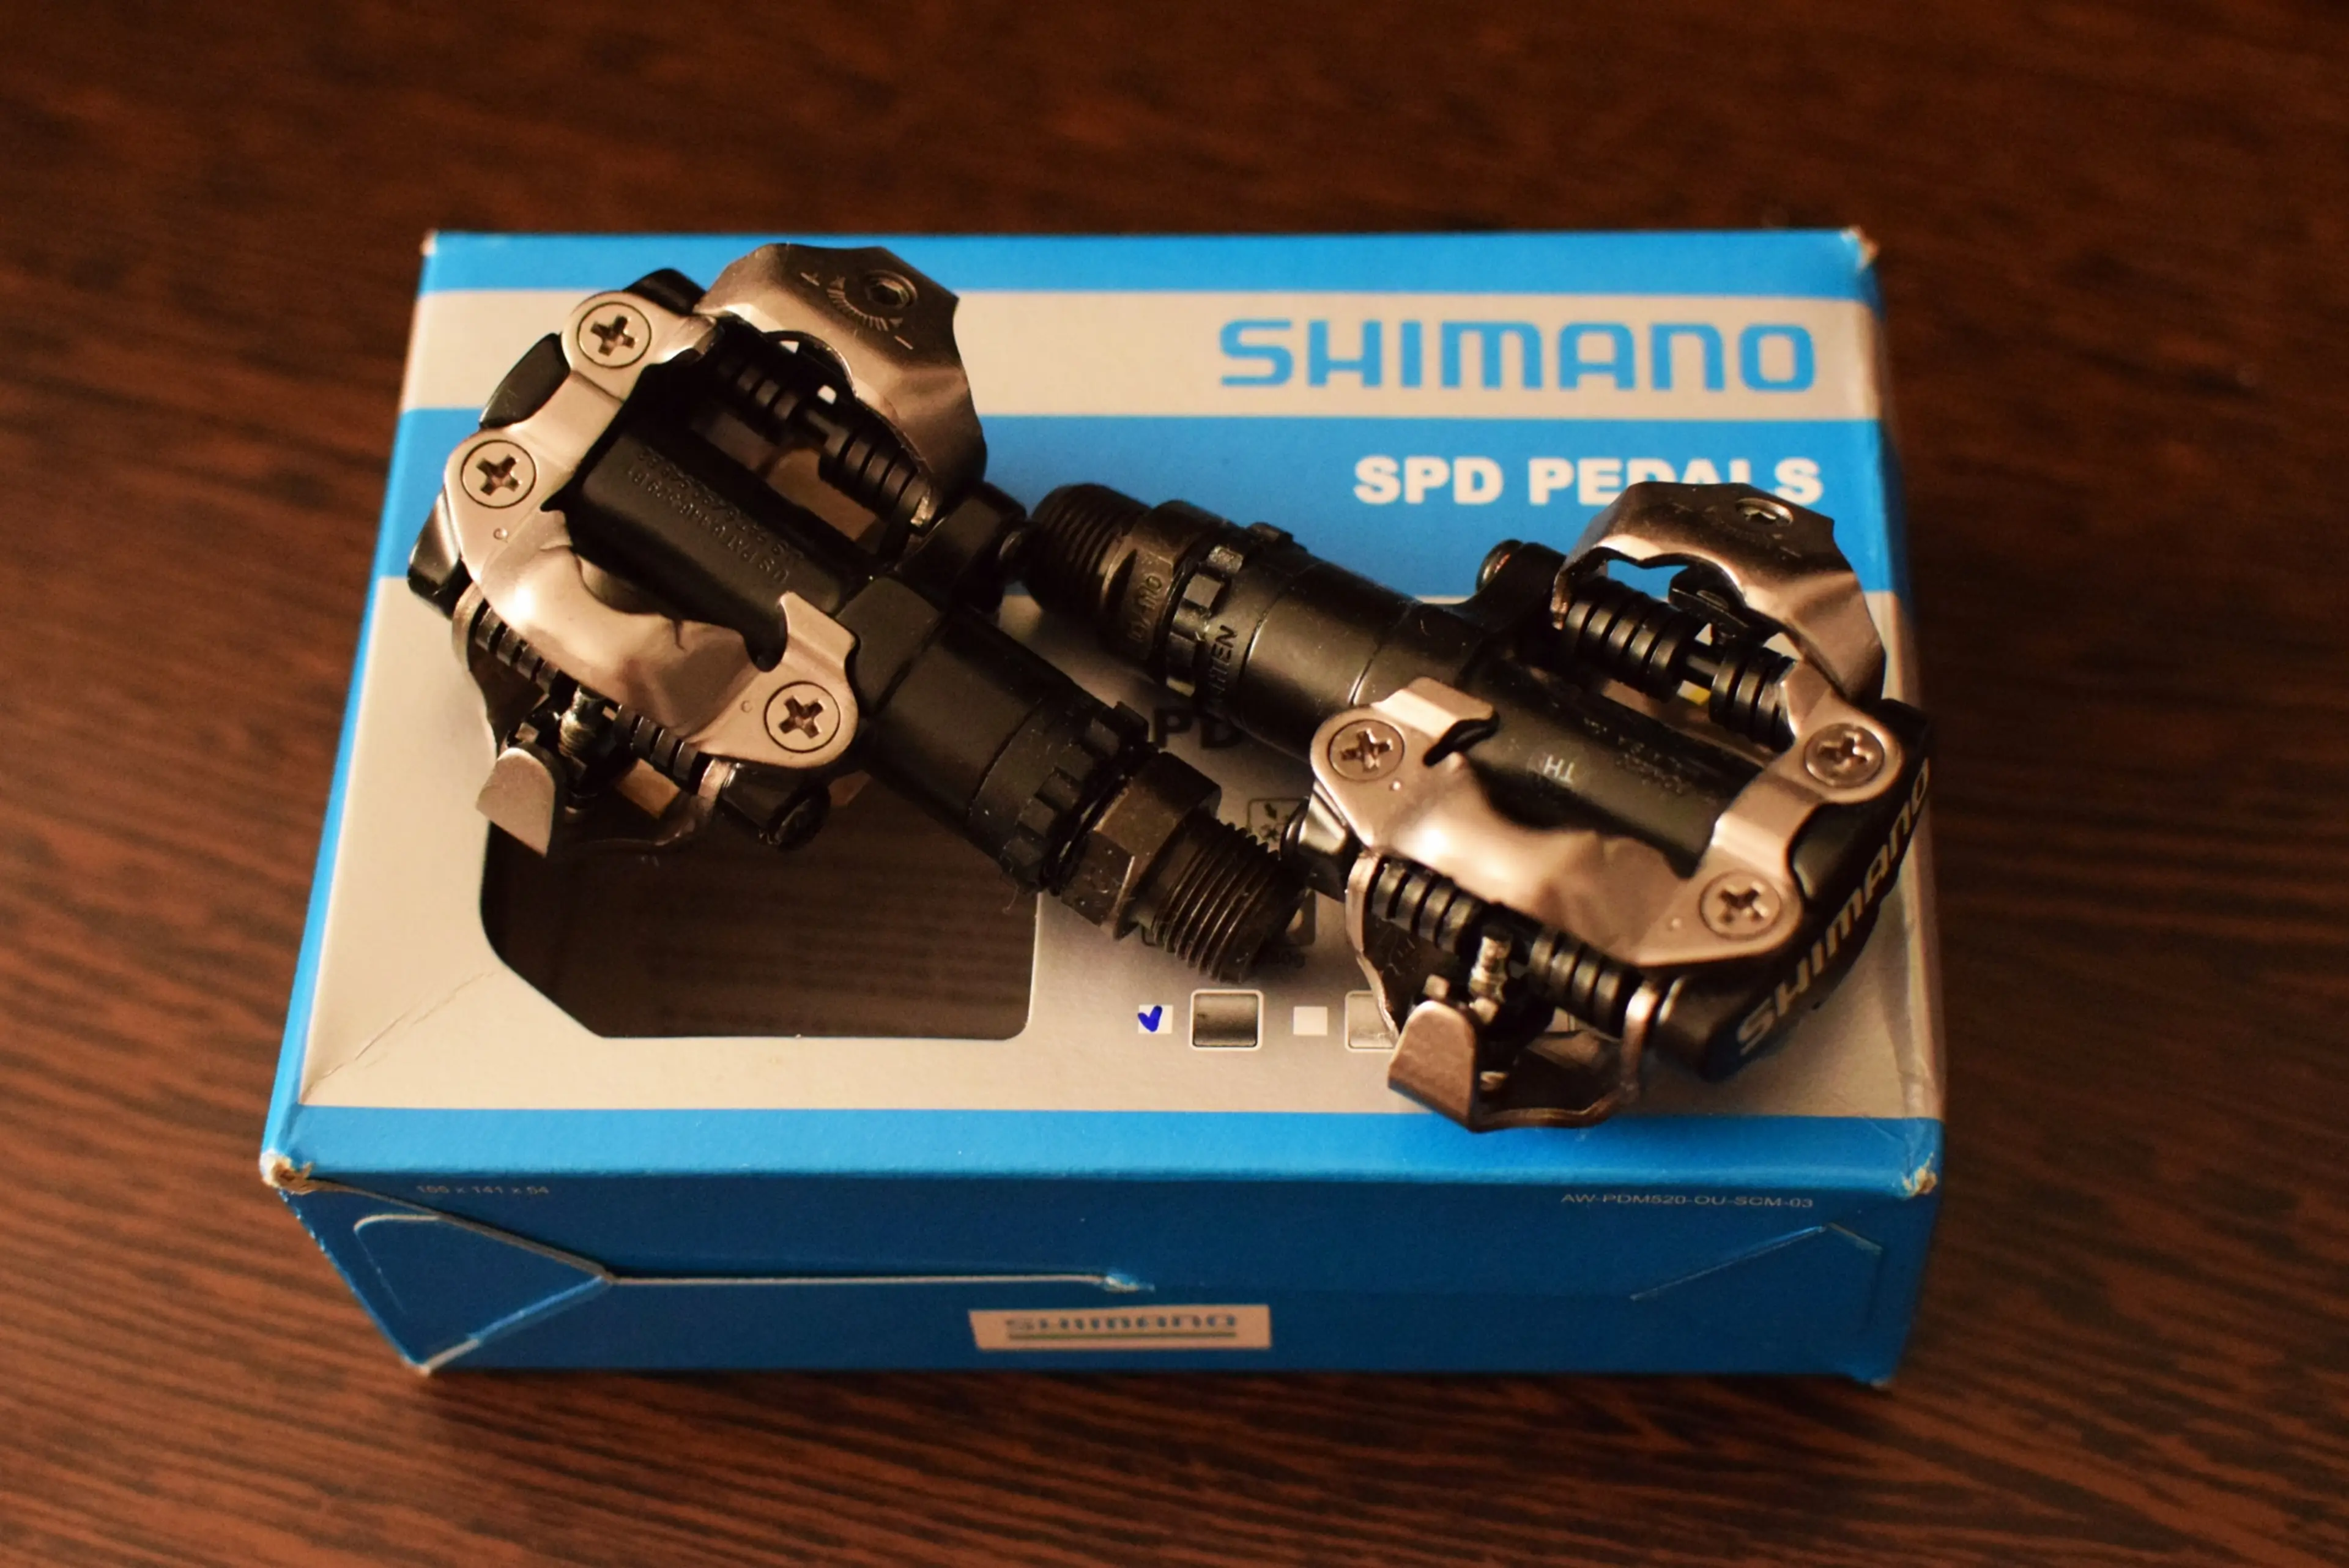 1. Pedale Shimano SPD PD-M520